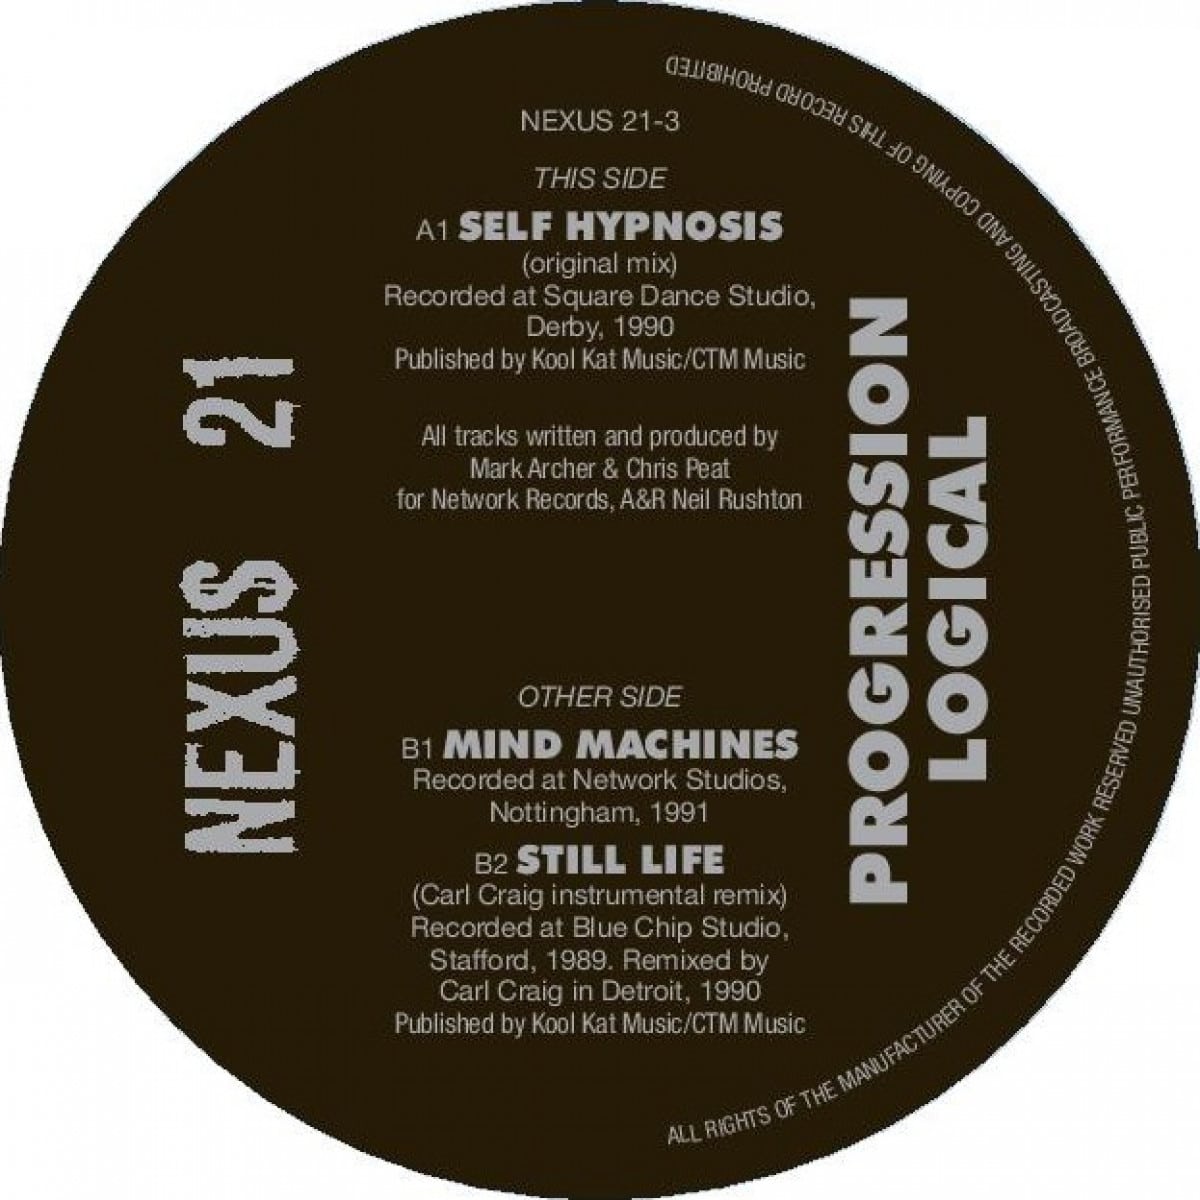 Nexus 21 - Progression Logical (Carl Craig remix) - NEXUS21-3 - NETWORK RECORDS